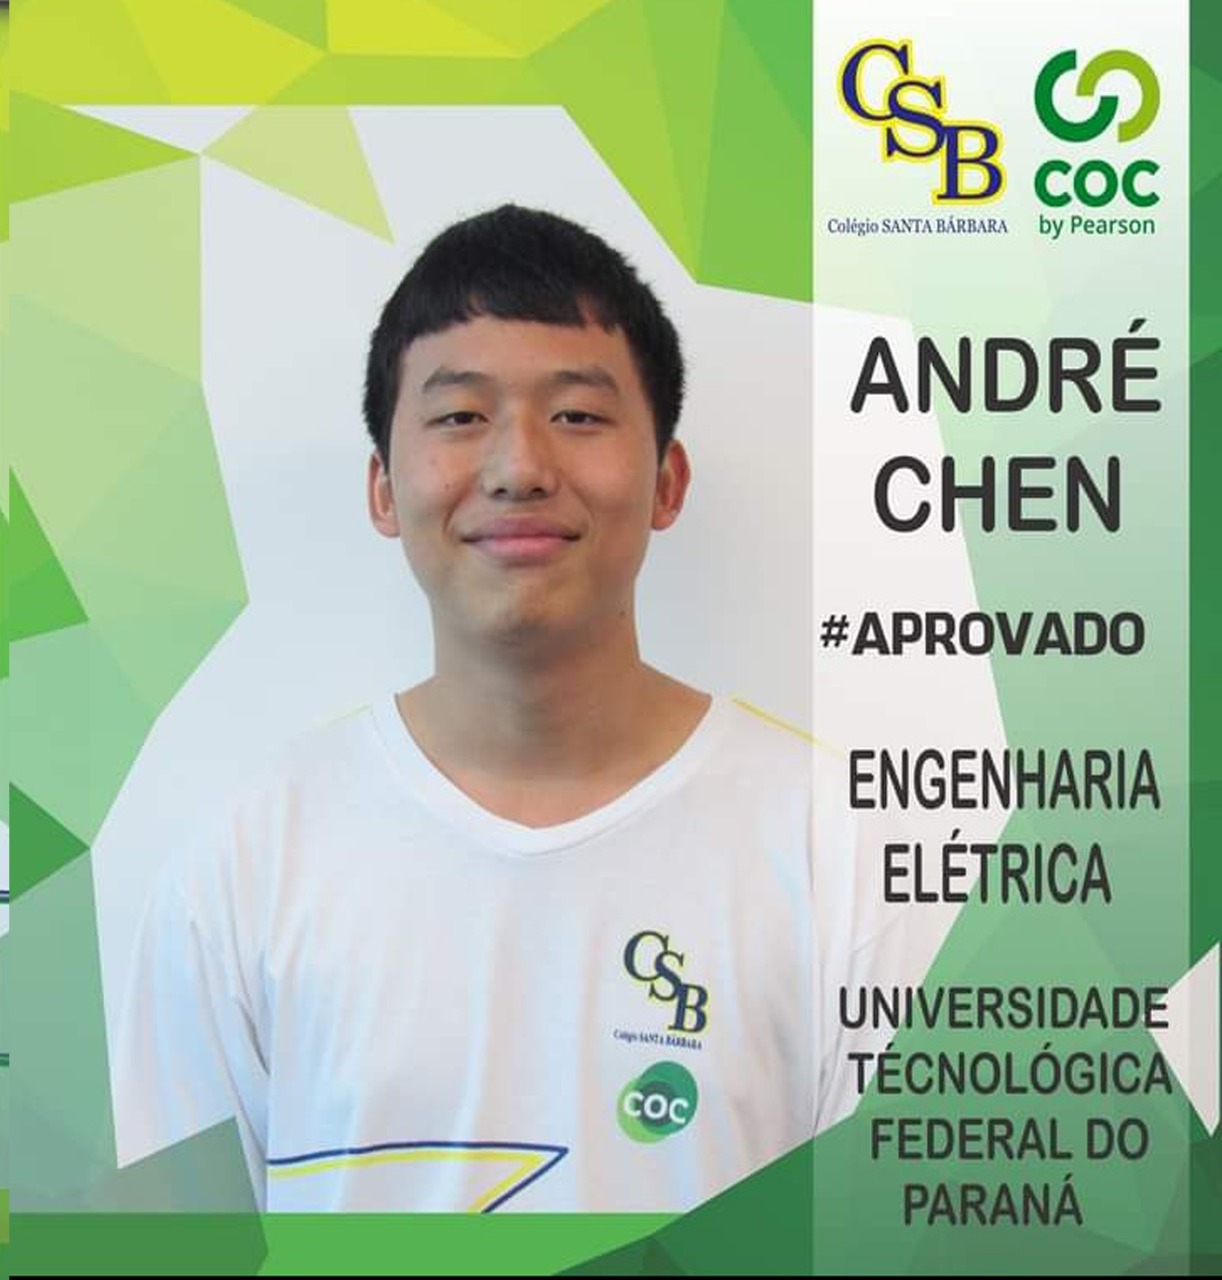 André Chen